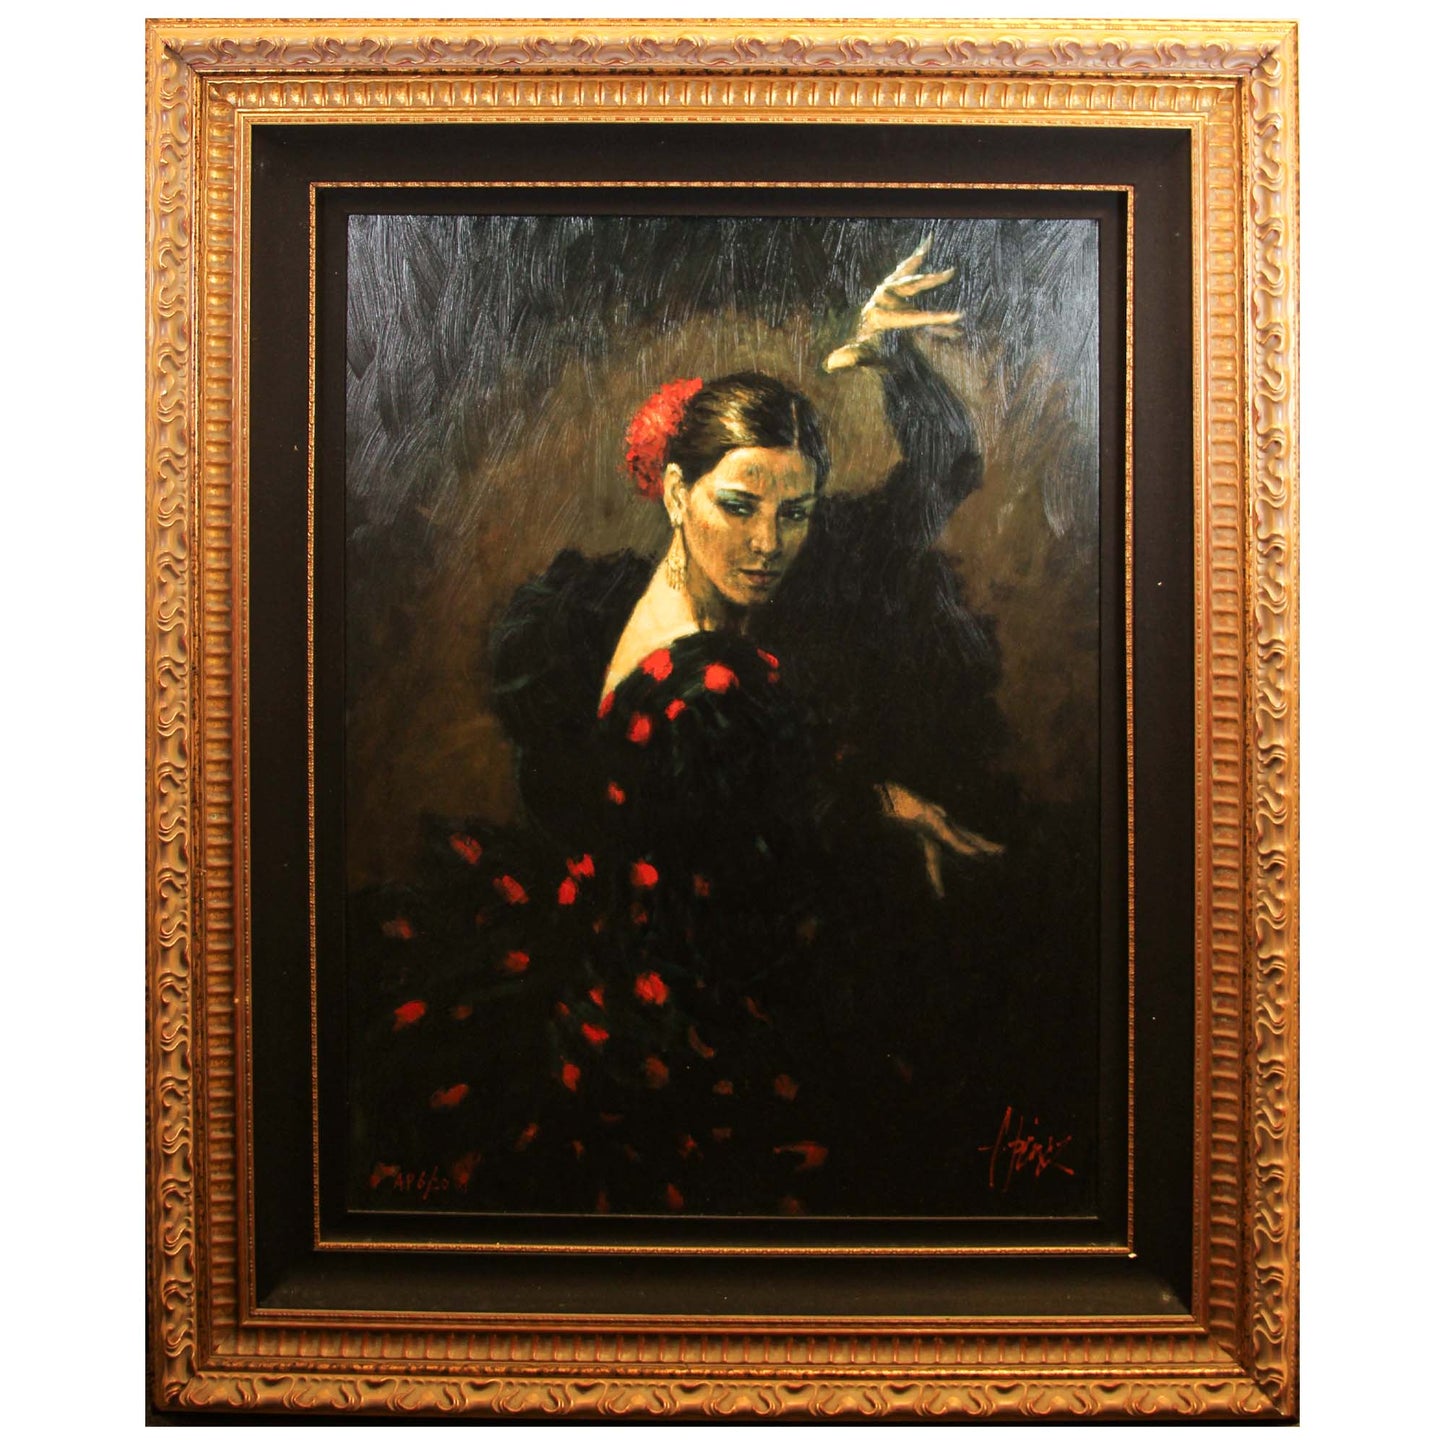 Fabian Perez; "Pasion Flamenco" Frame